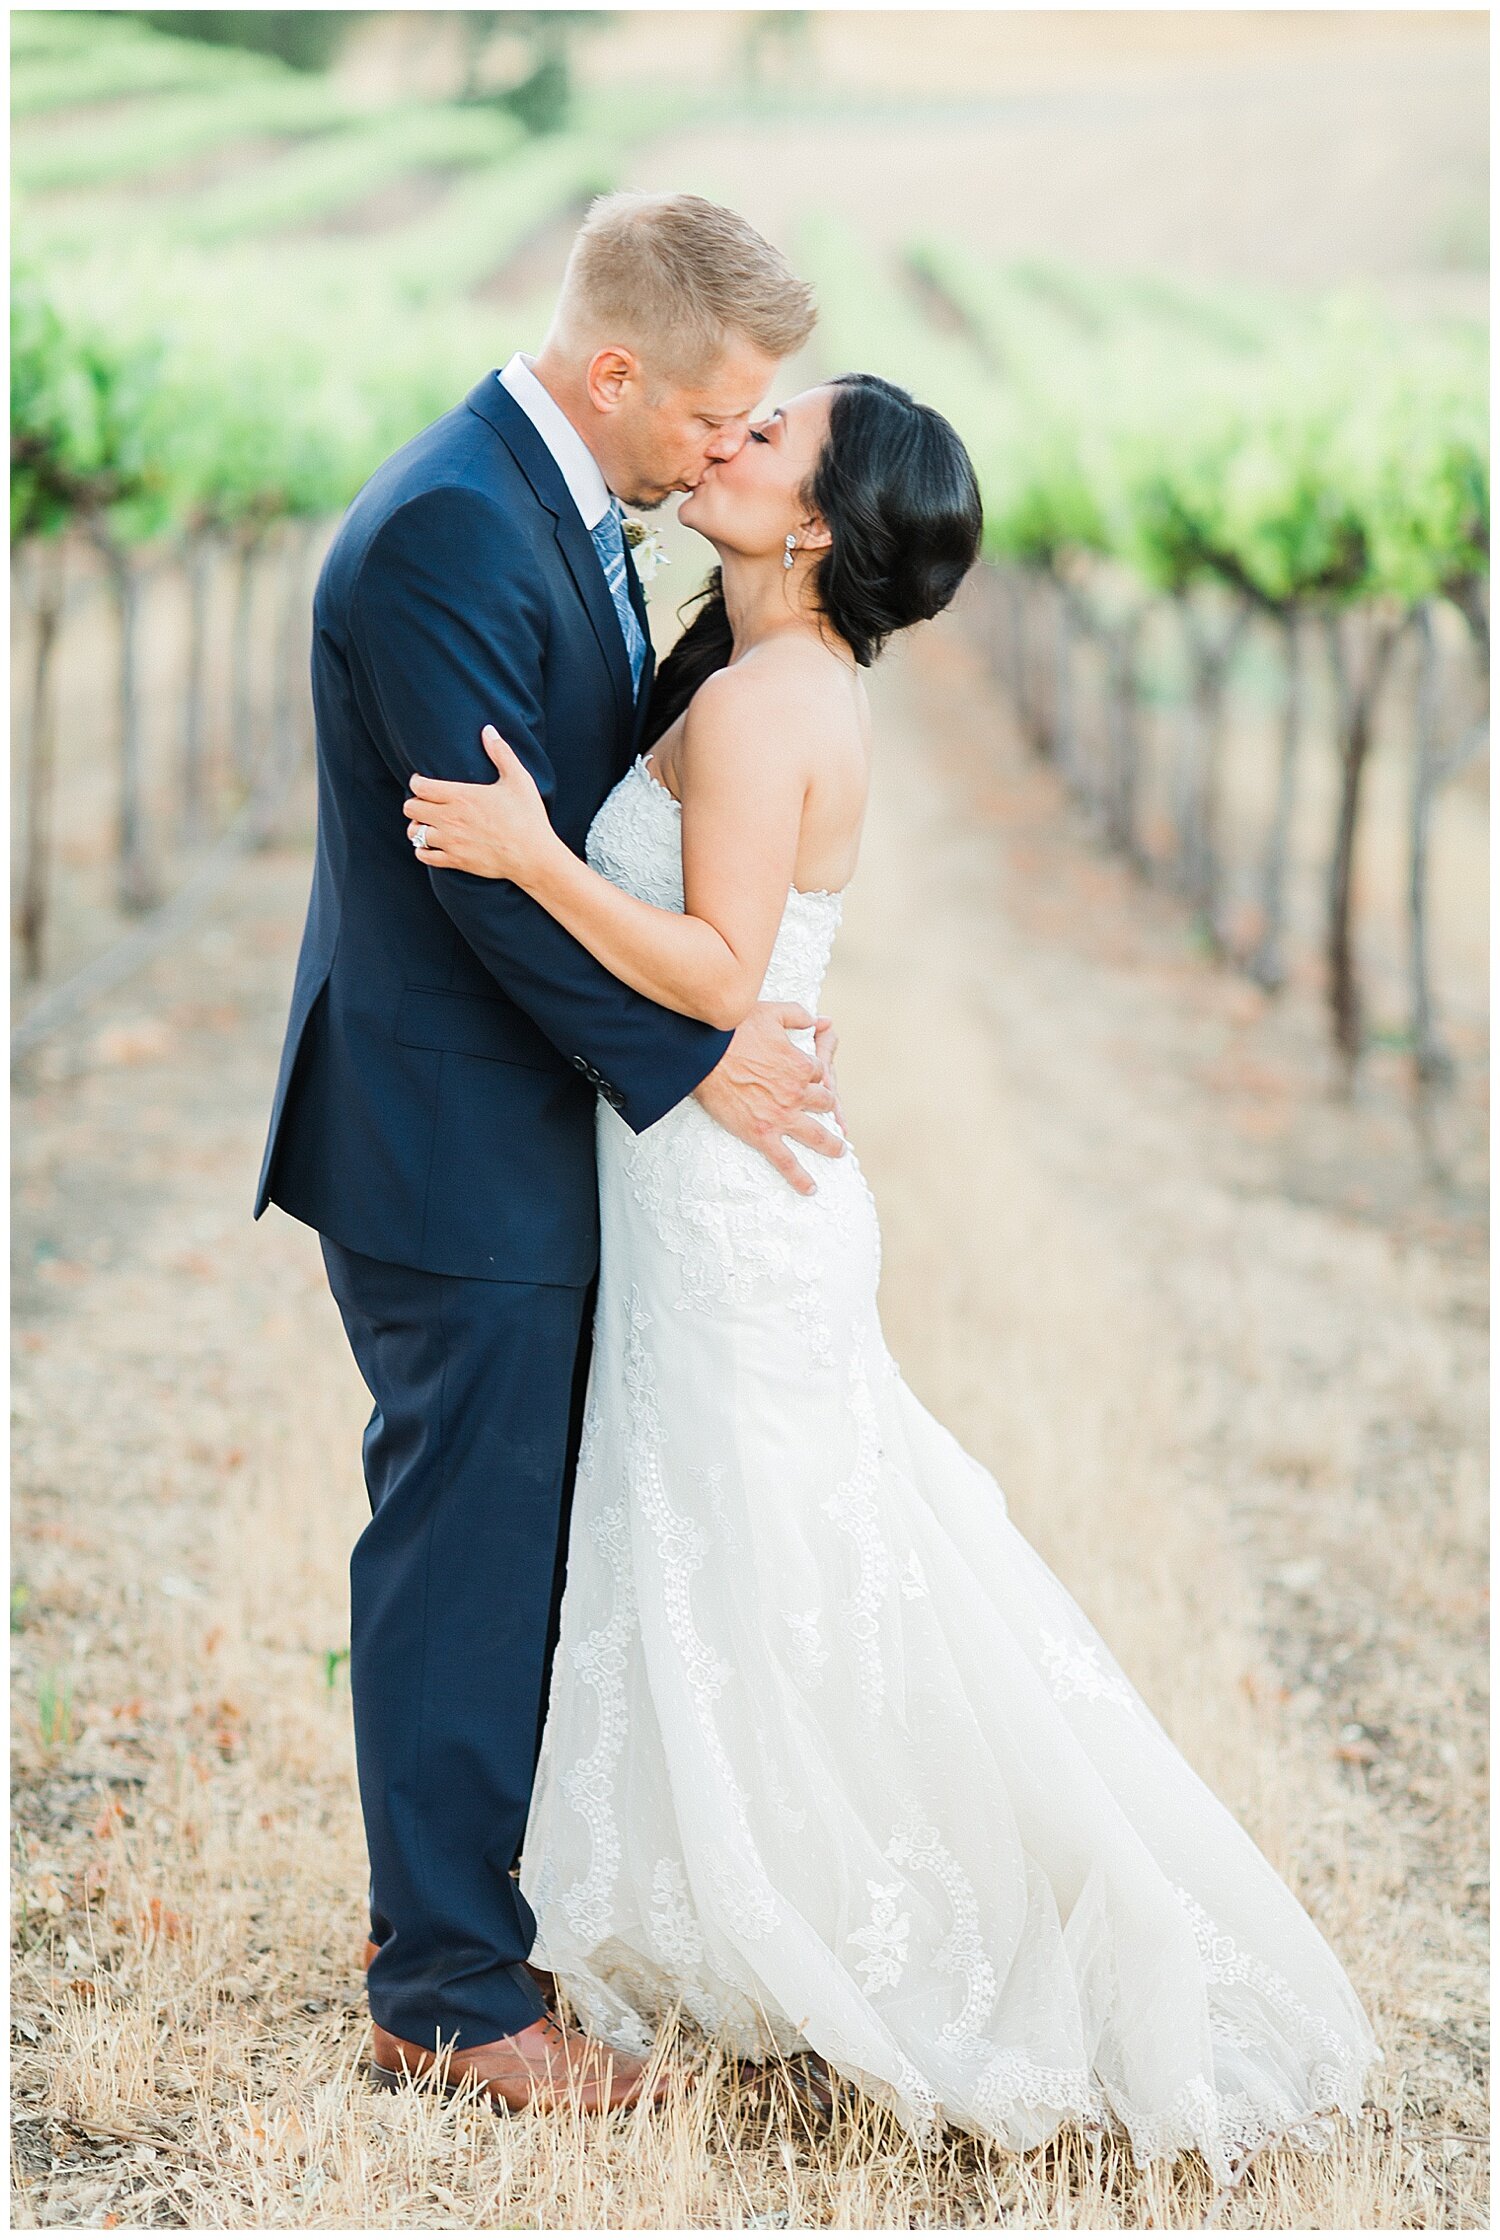 Reina and Jason's Wedding at HammerSky Vineyards | Meagan Ramirez Photography